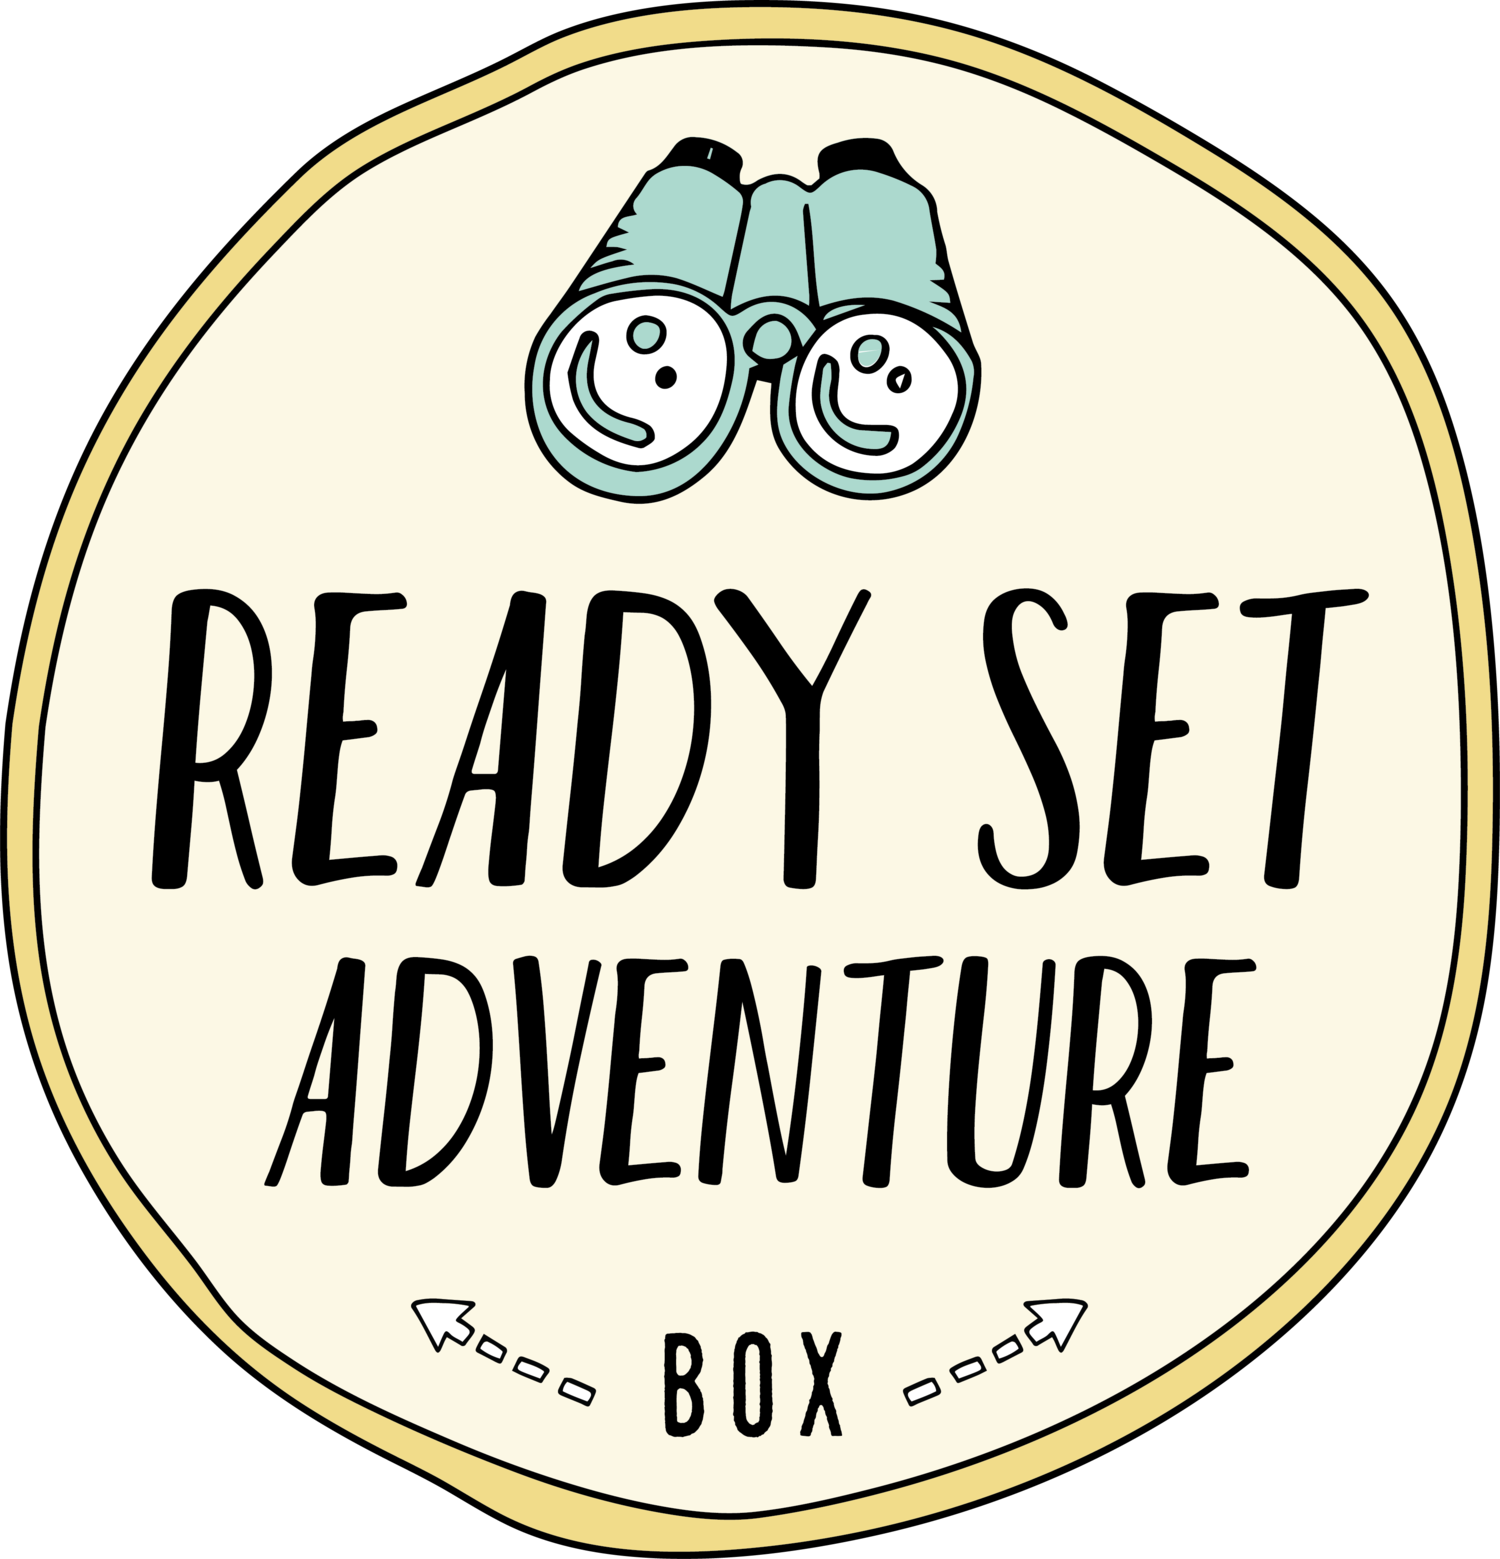 Ready Set Adventure Box